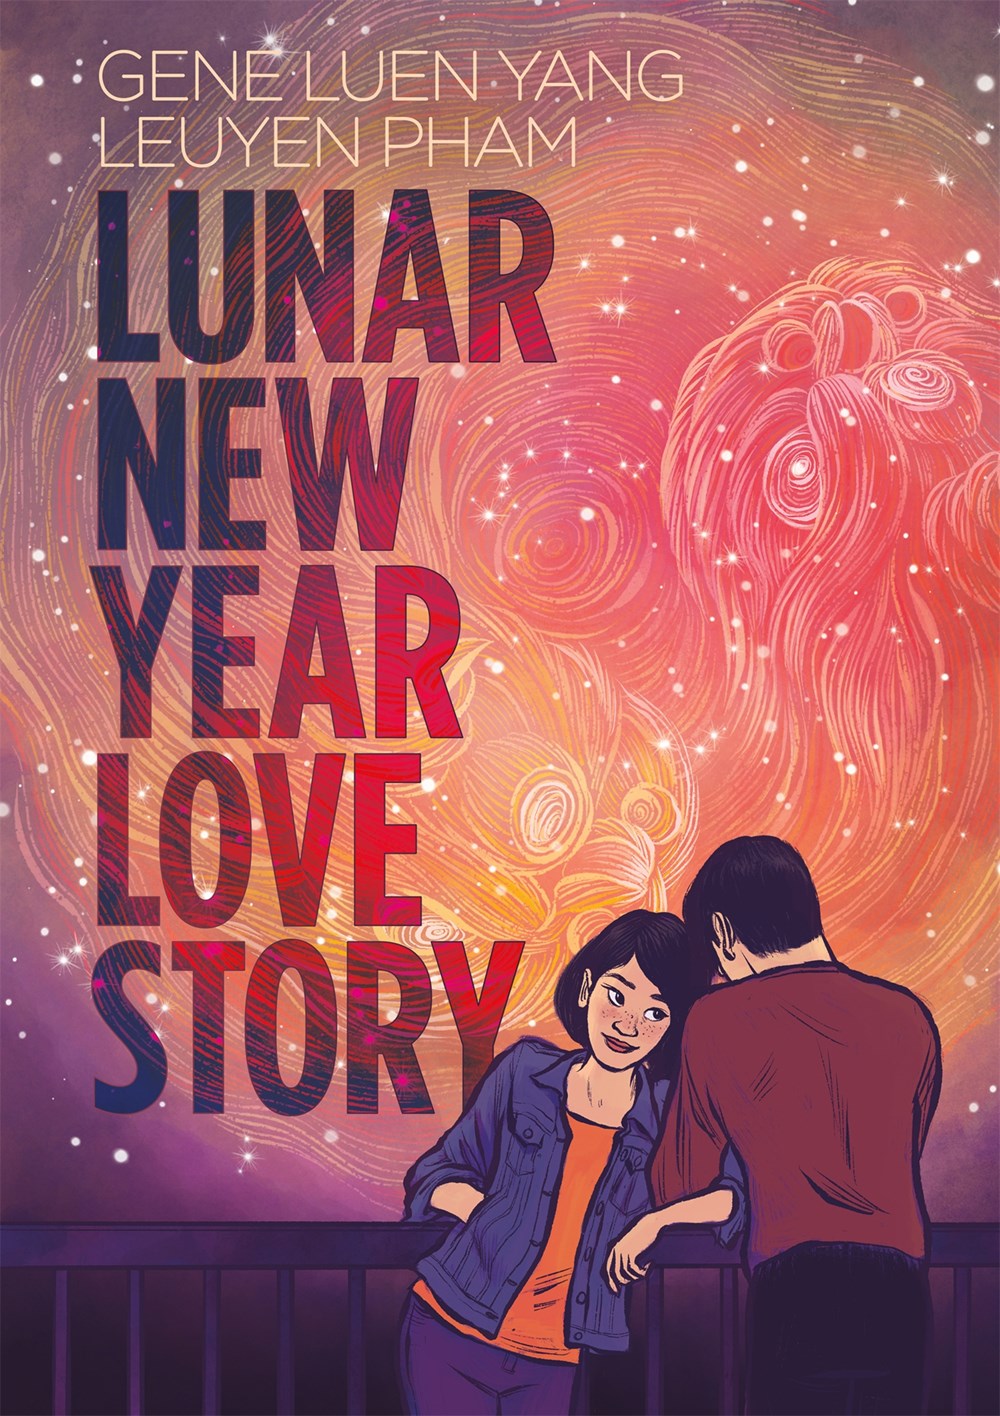 Lunar New Year Love Story by Gene Luen Yang